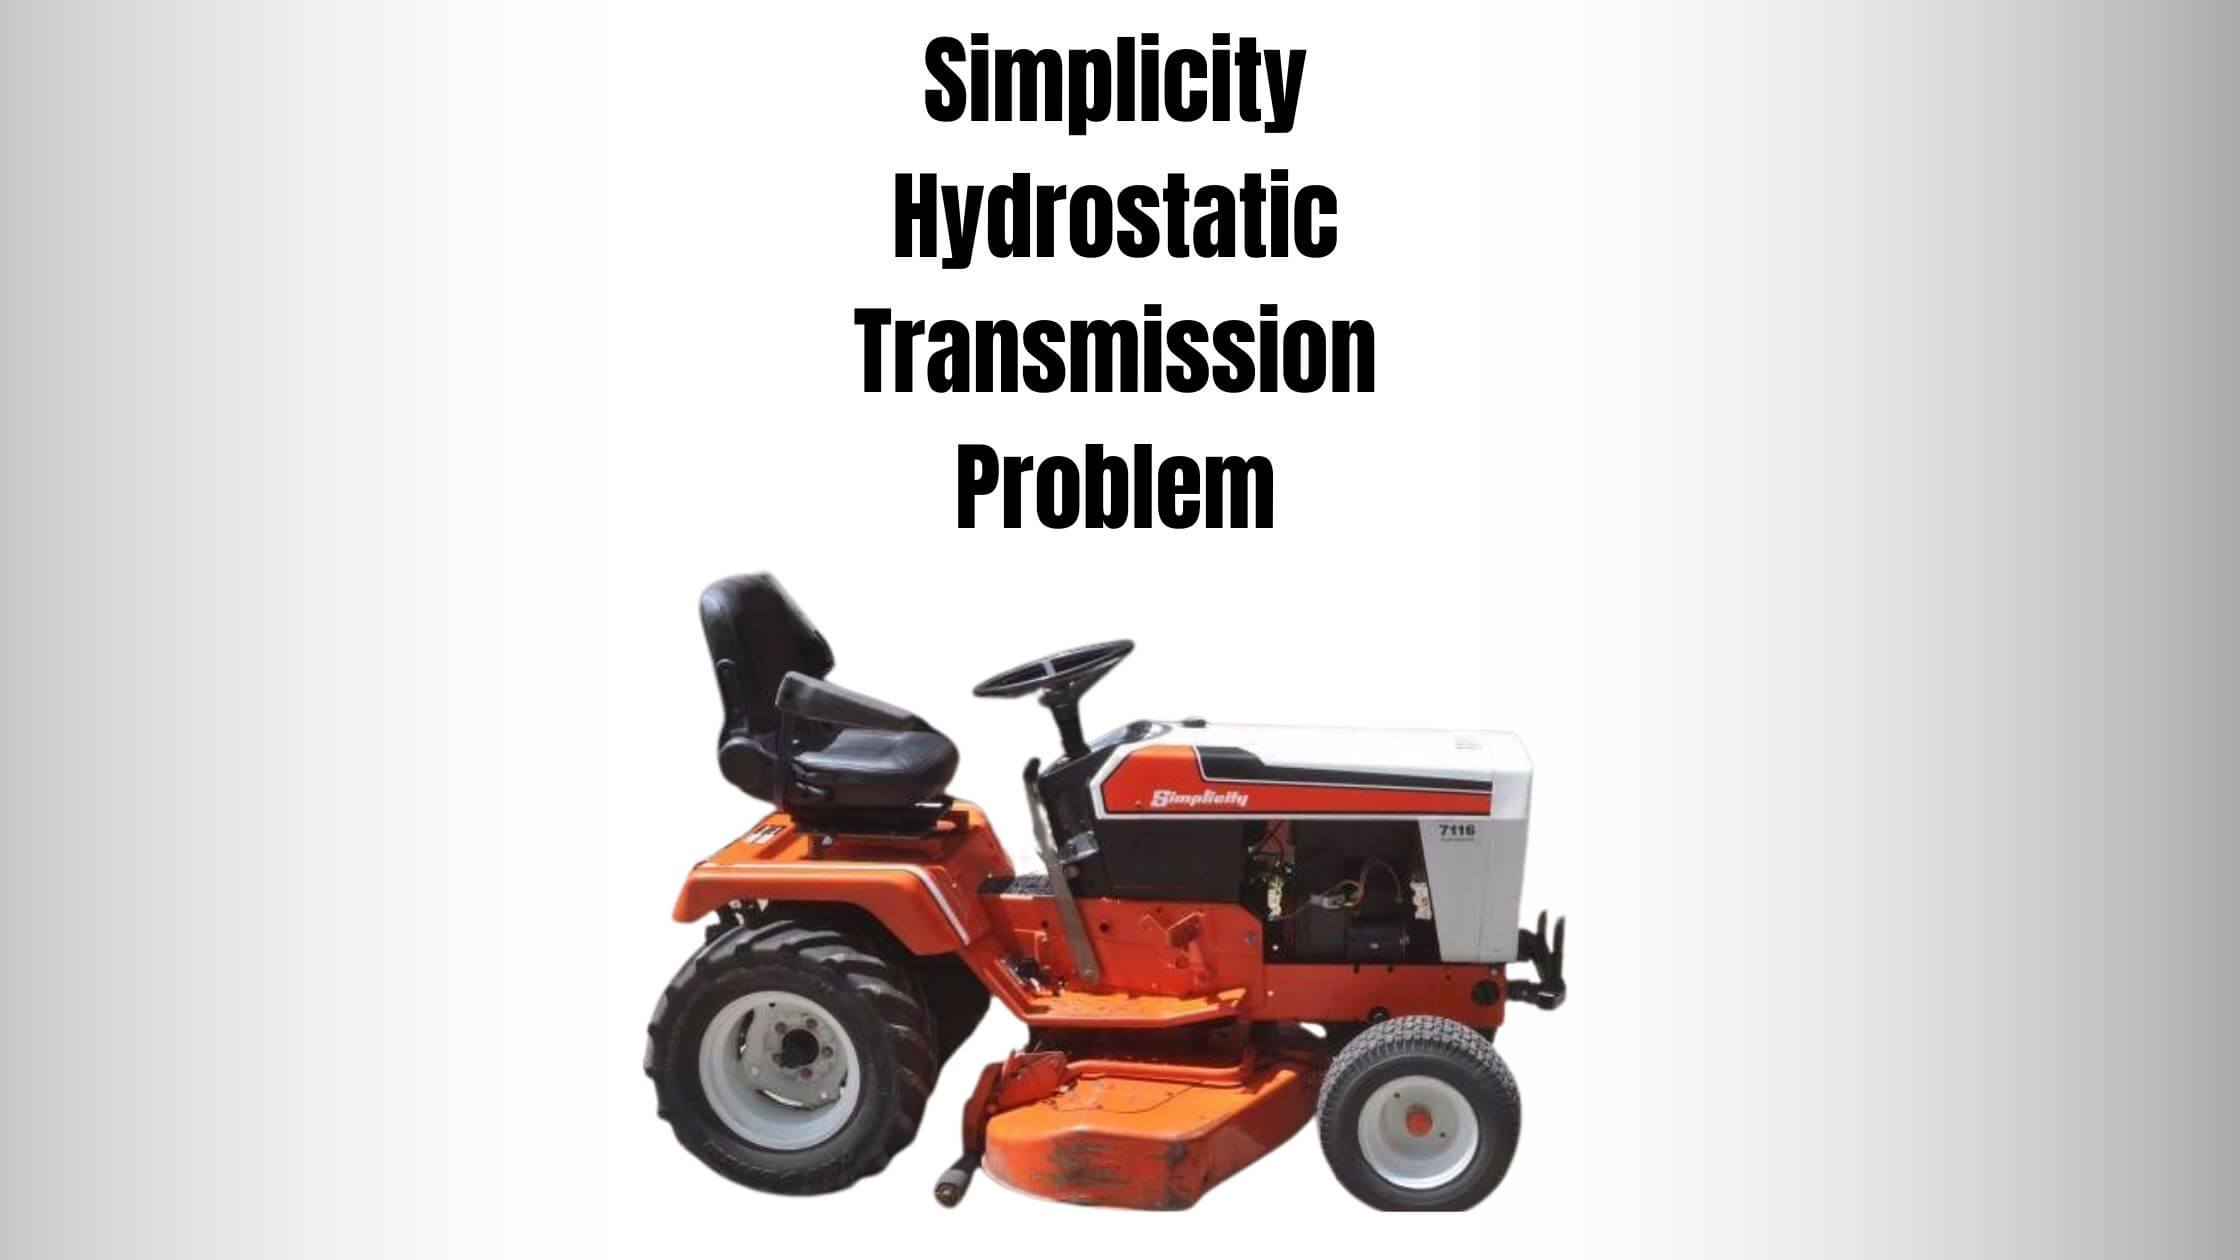 implicity Hydrostatic Transmission Problem